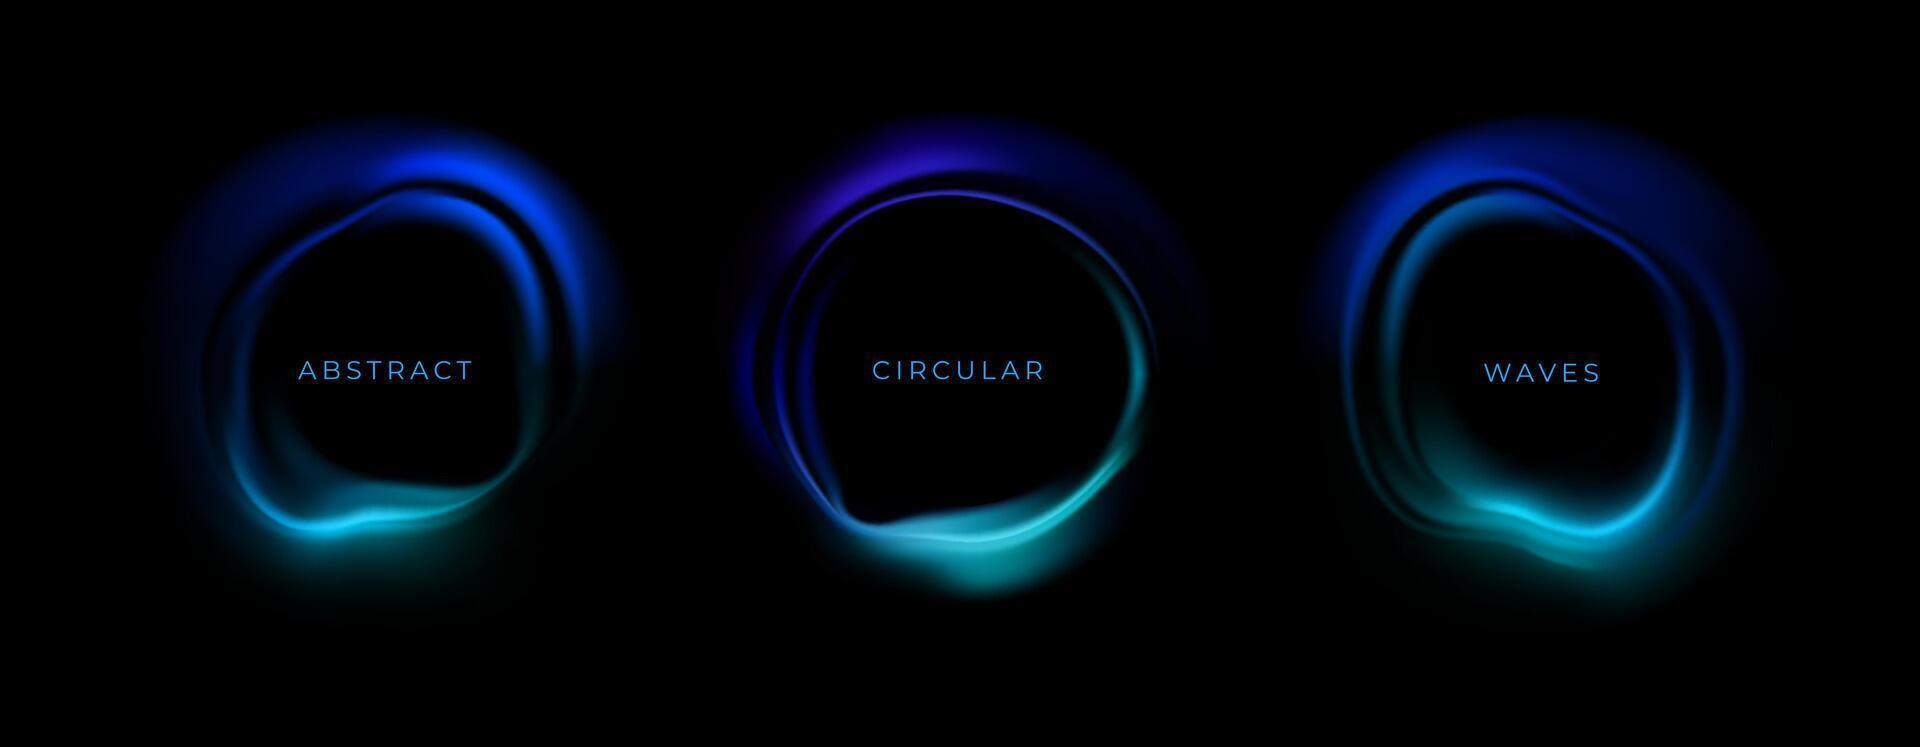 resumen circular olas en negro aislado antecedentes. azul neón fondo en formar de dinámica luminoso círculo. música concepto, igualada. vector ilustración con redondo marco.